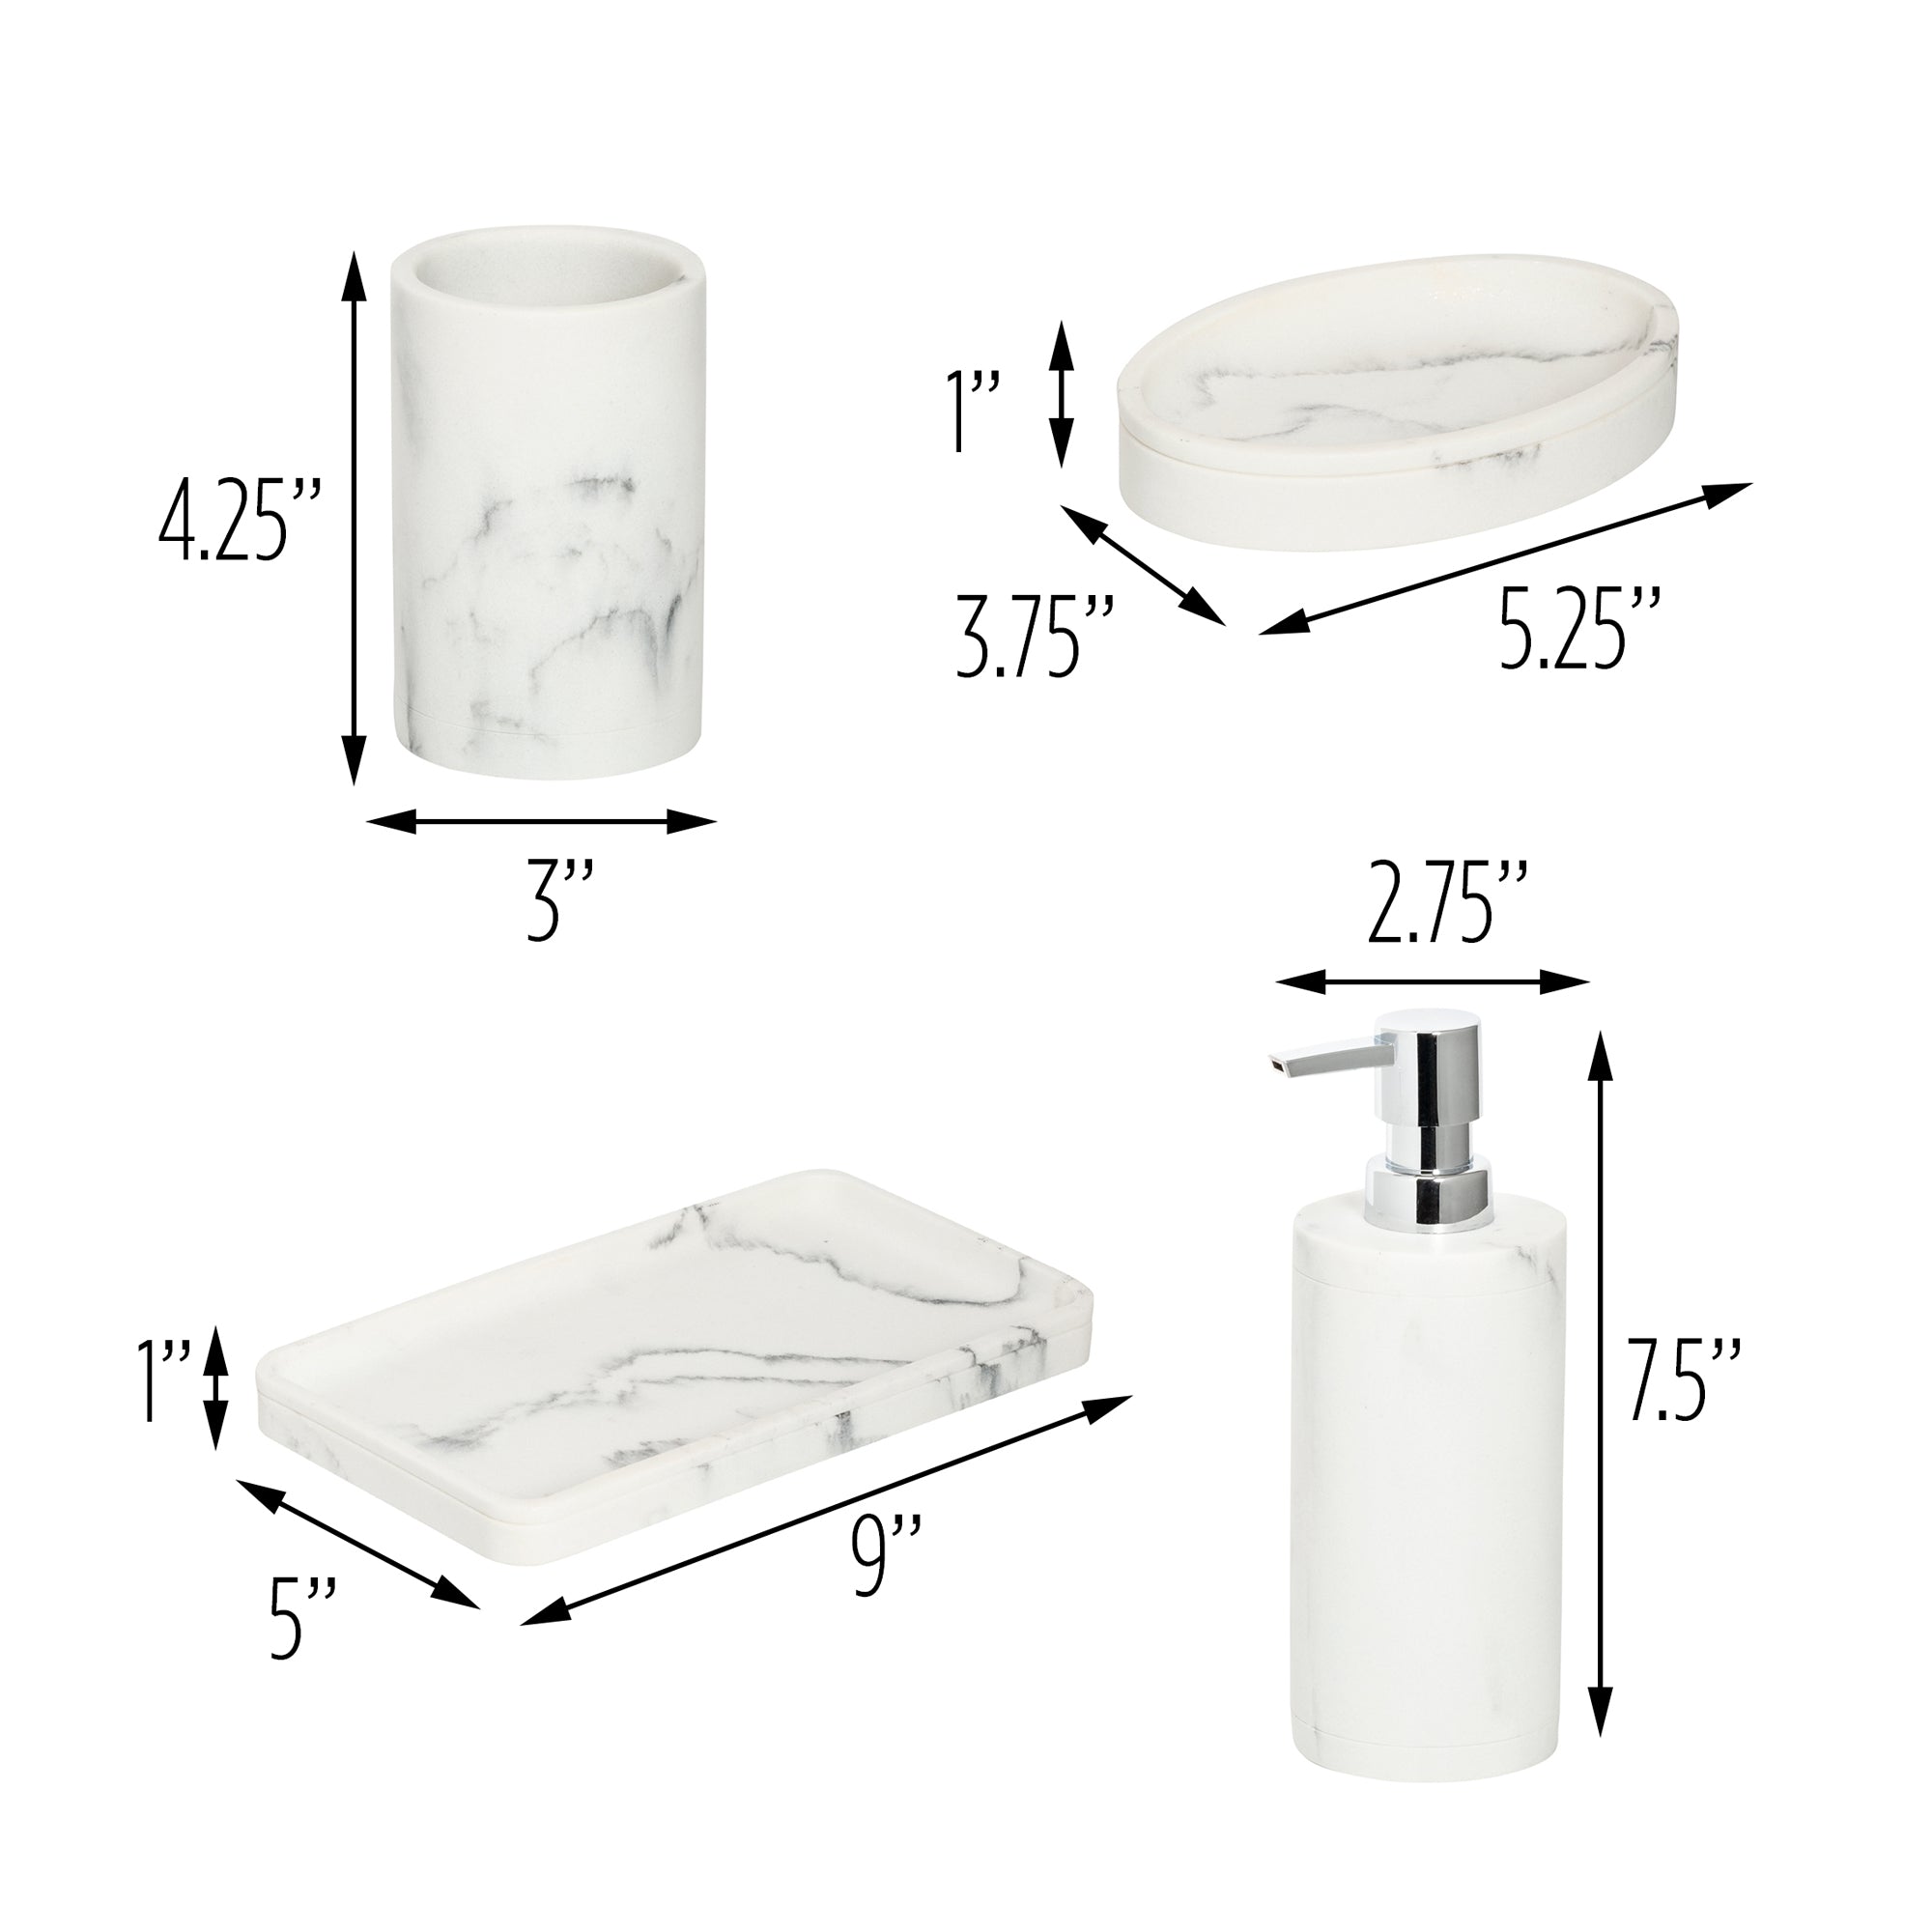 Marble Bathroom Kitche Sinks Soap Dispenser Tray Set For Home Pack